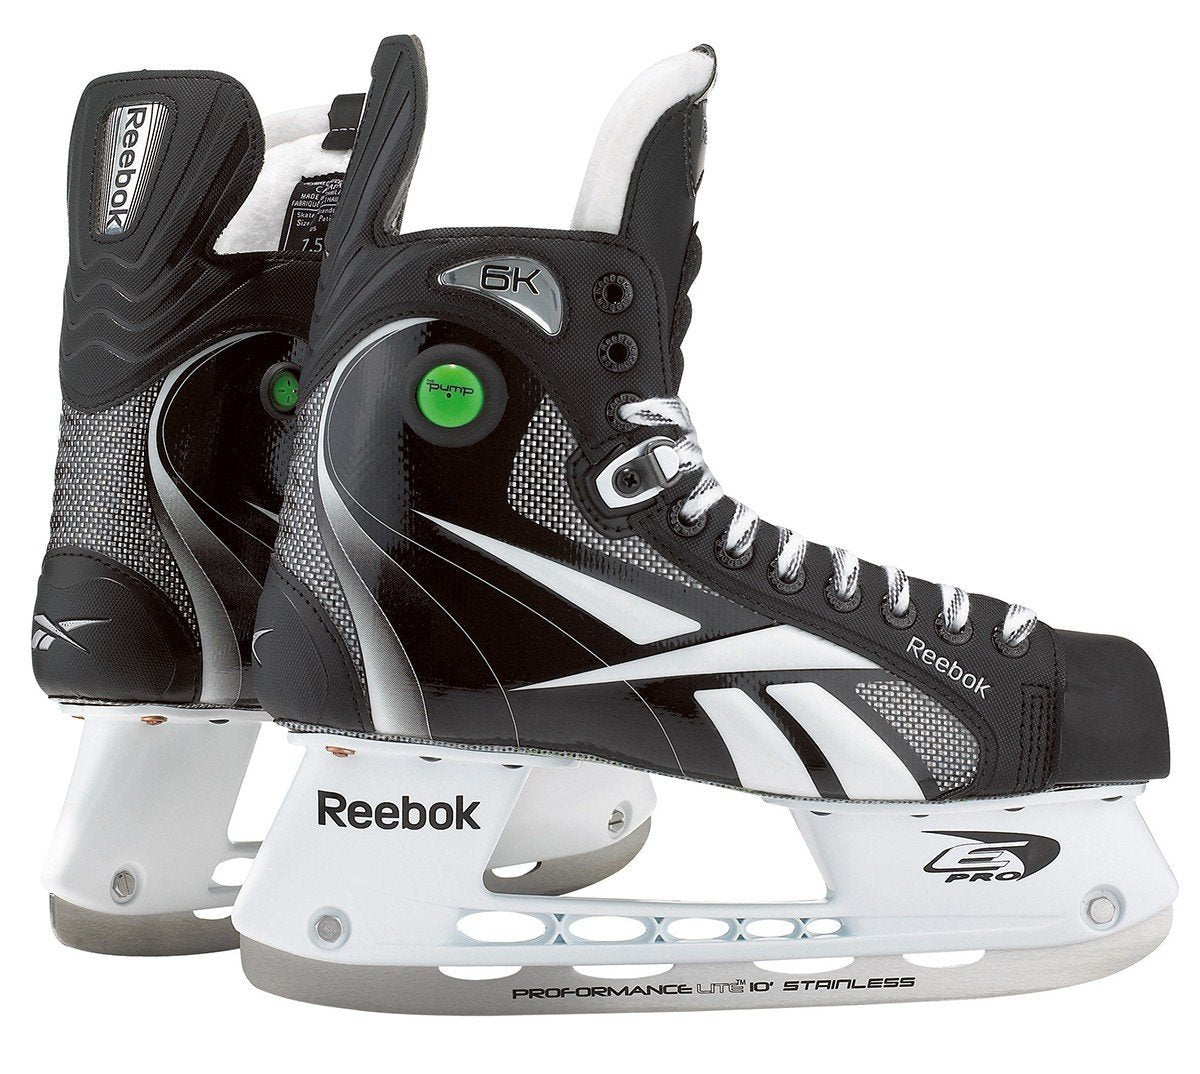 reebok 6k pump skates review, OFF 70 